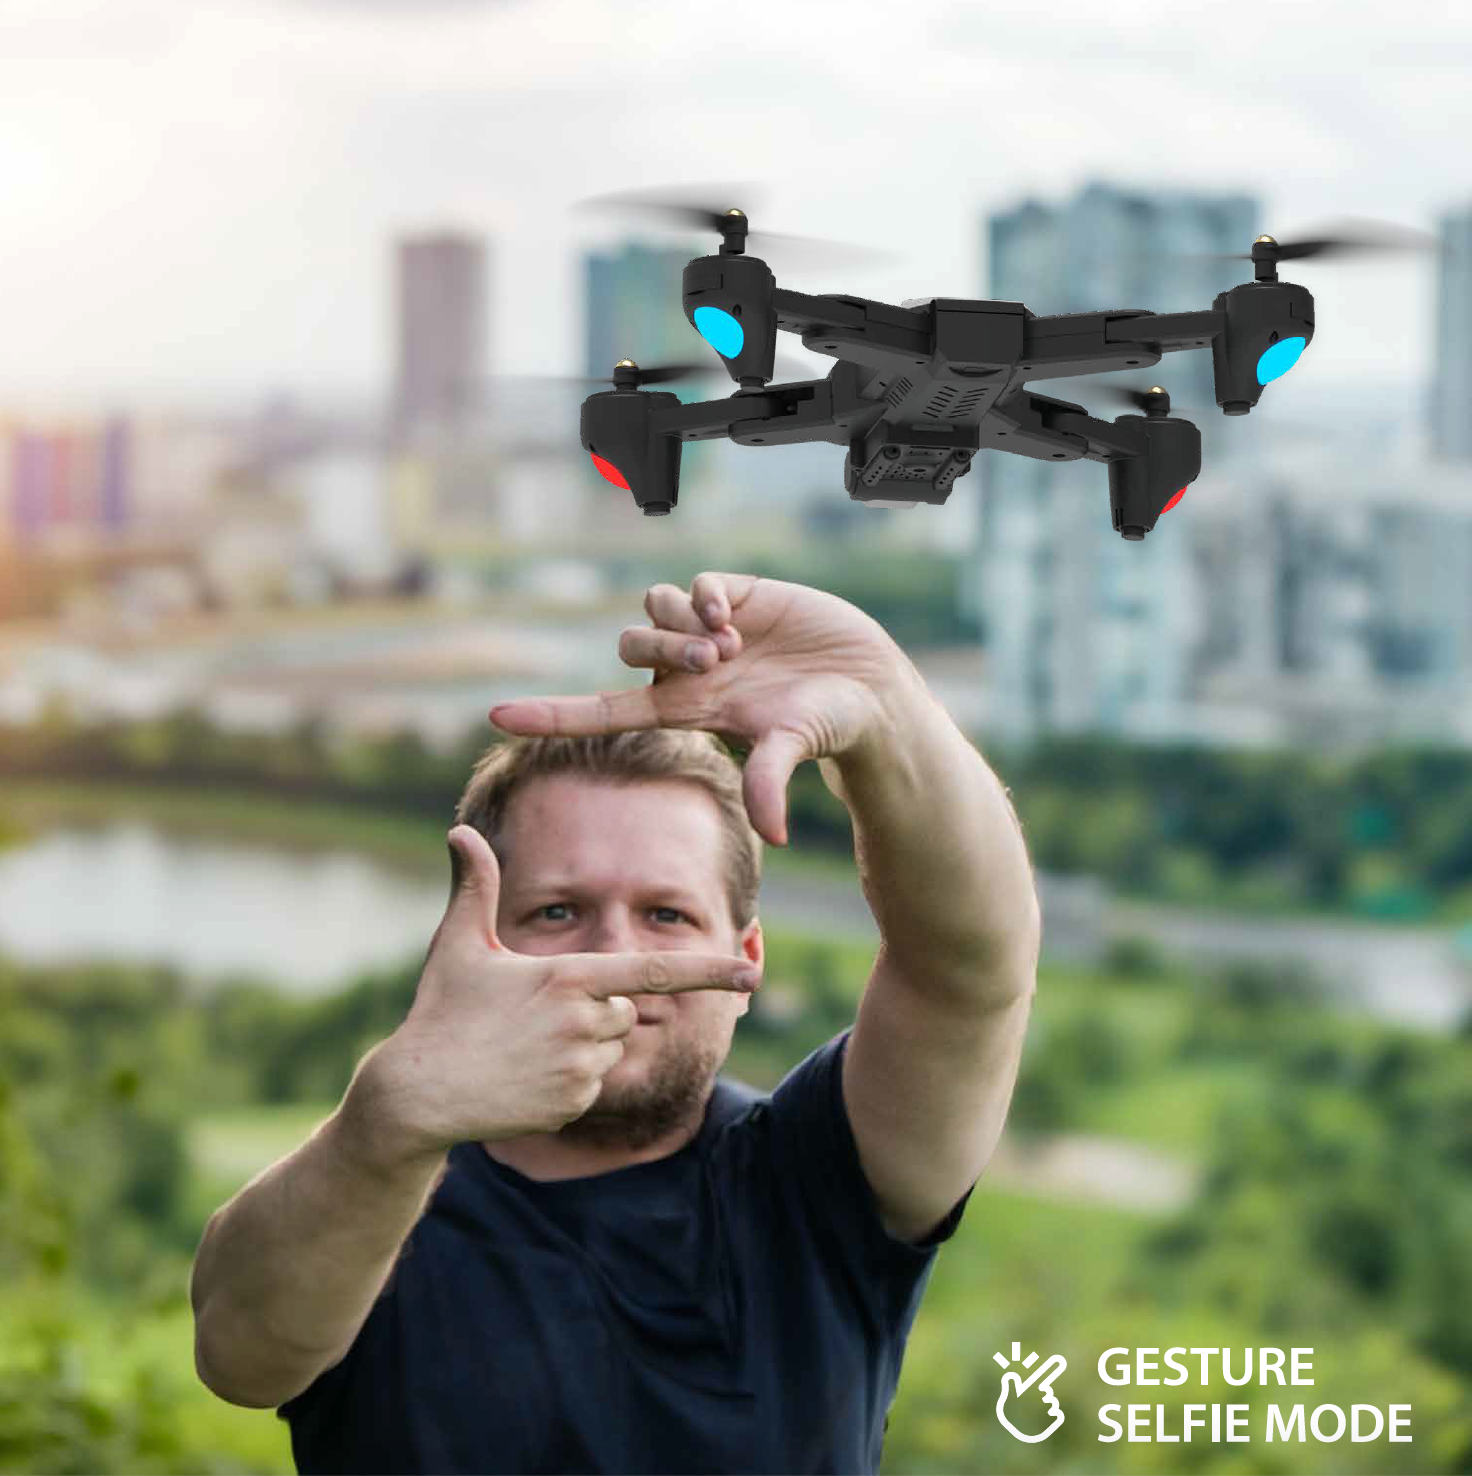 electrobotic drone video photo selfie gesture selfie mode